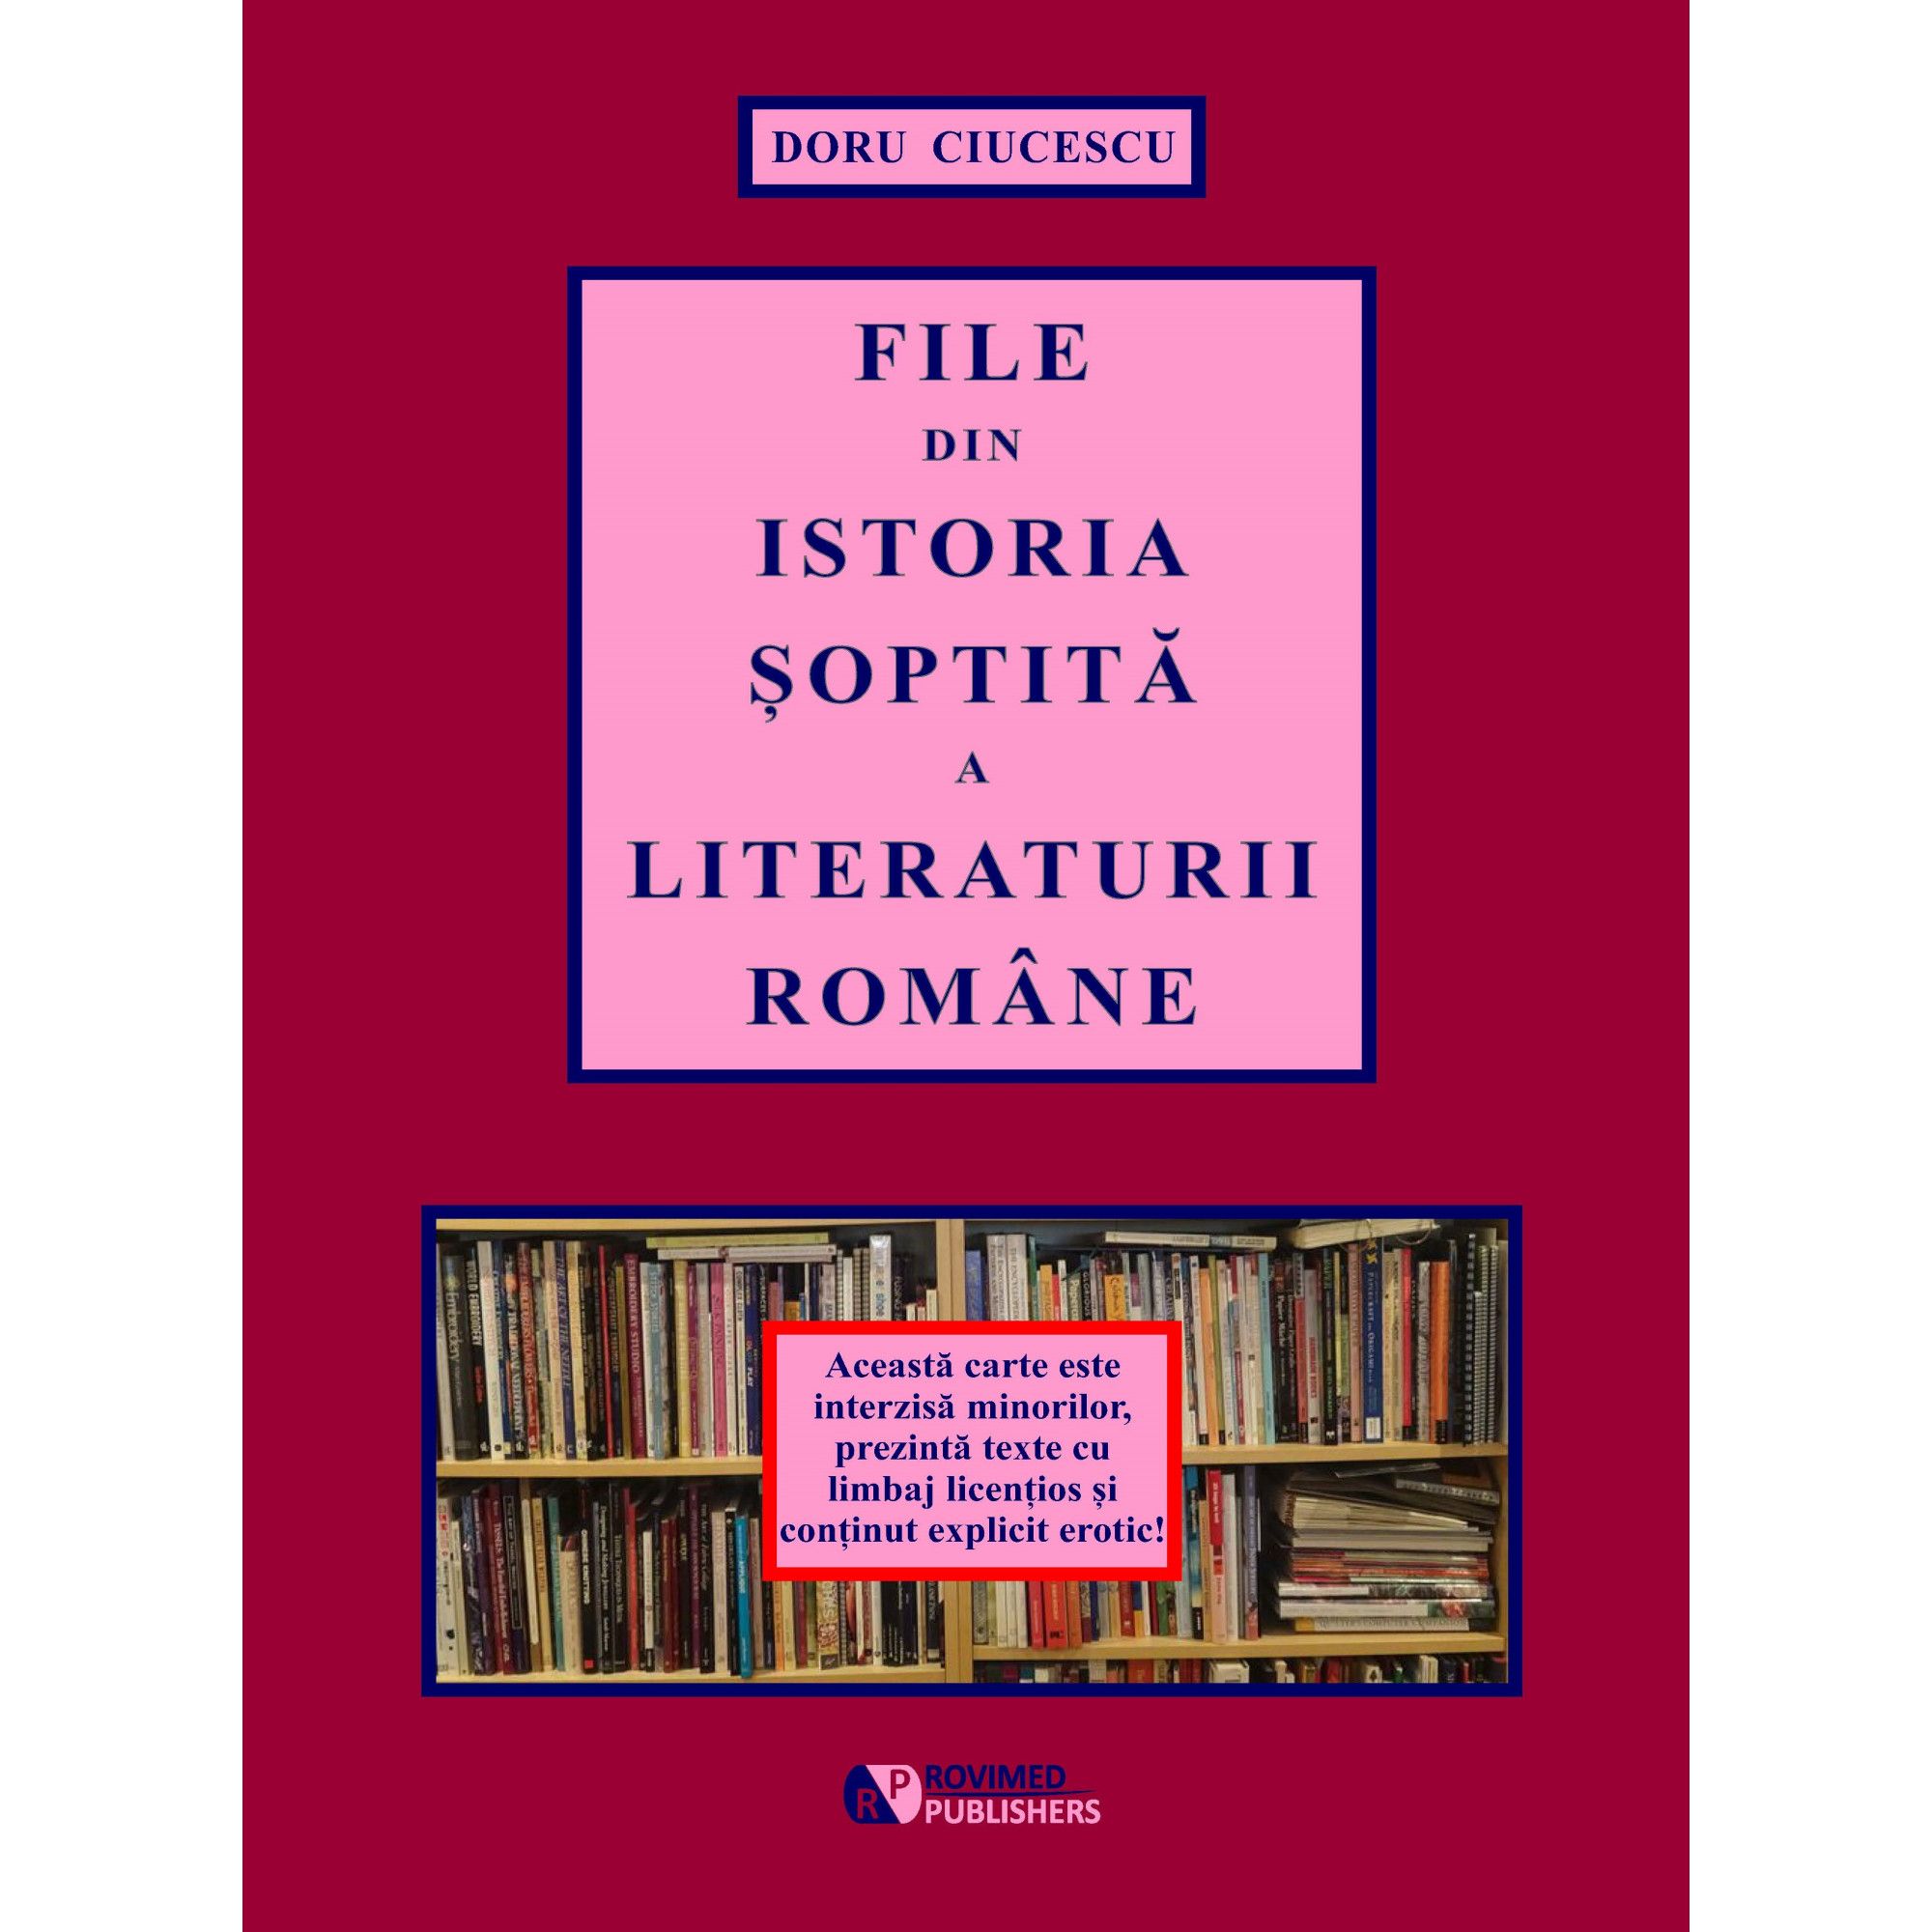 File din istoria soptita a literaturii romane | Doru Ciucescu carturesti.ro Carte